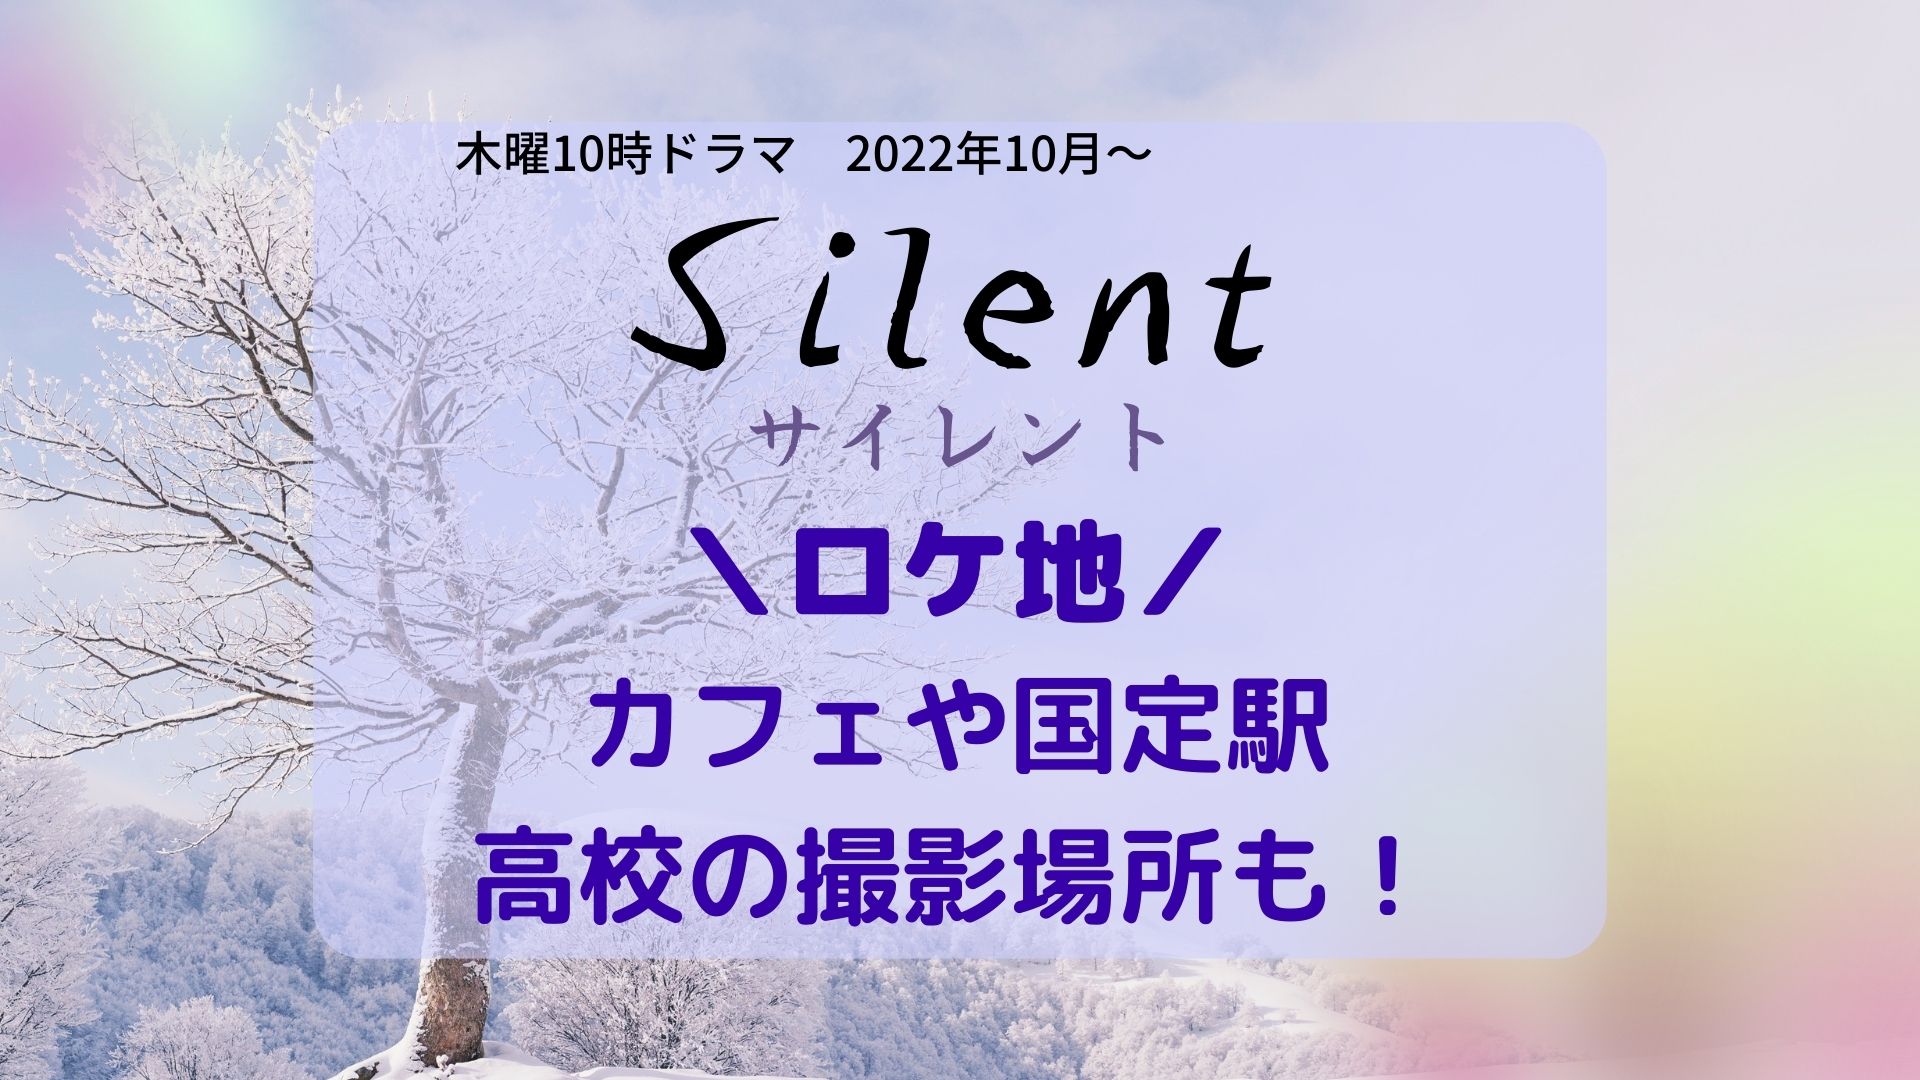 Silent (サイレント)ロケ地の国定駅・高校